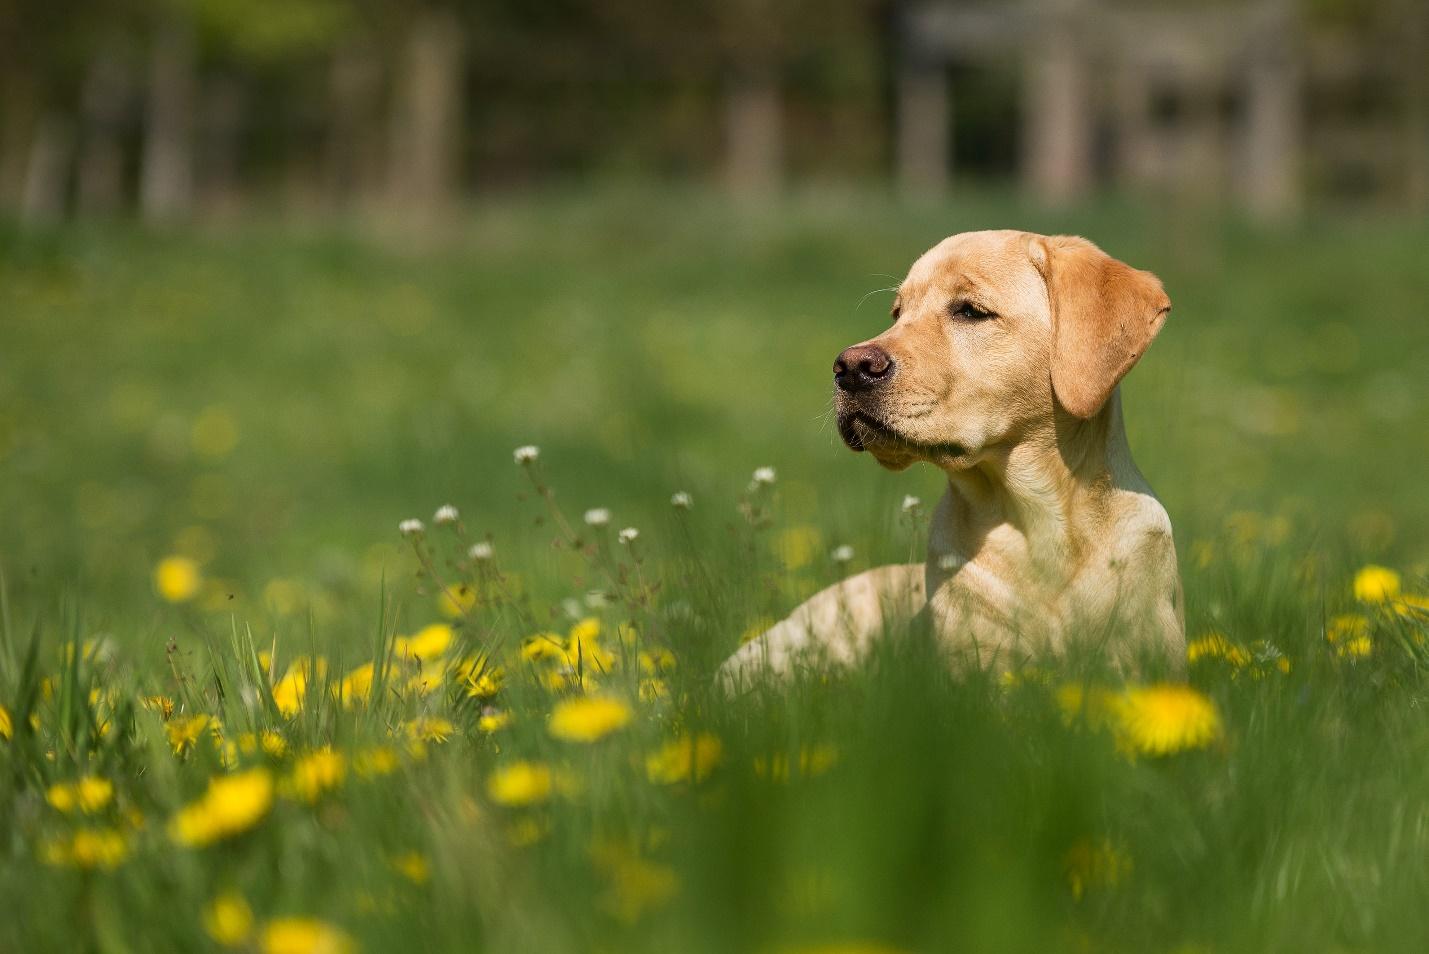 A dog lying on flowery grass.